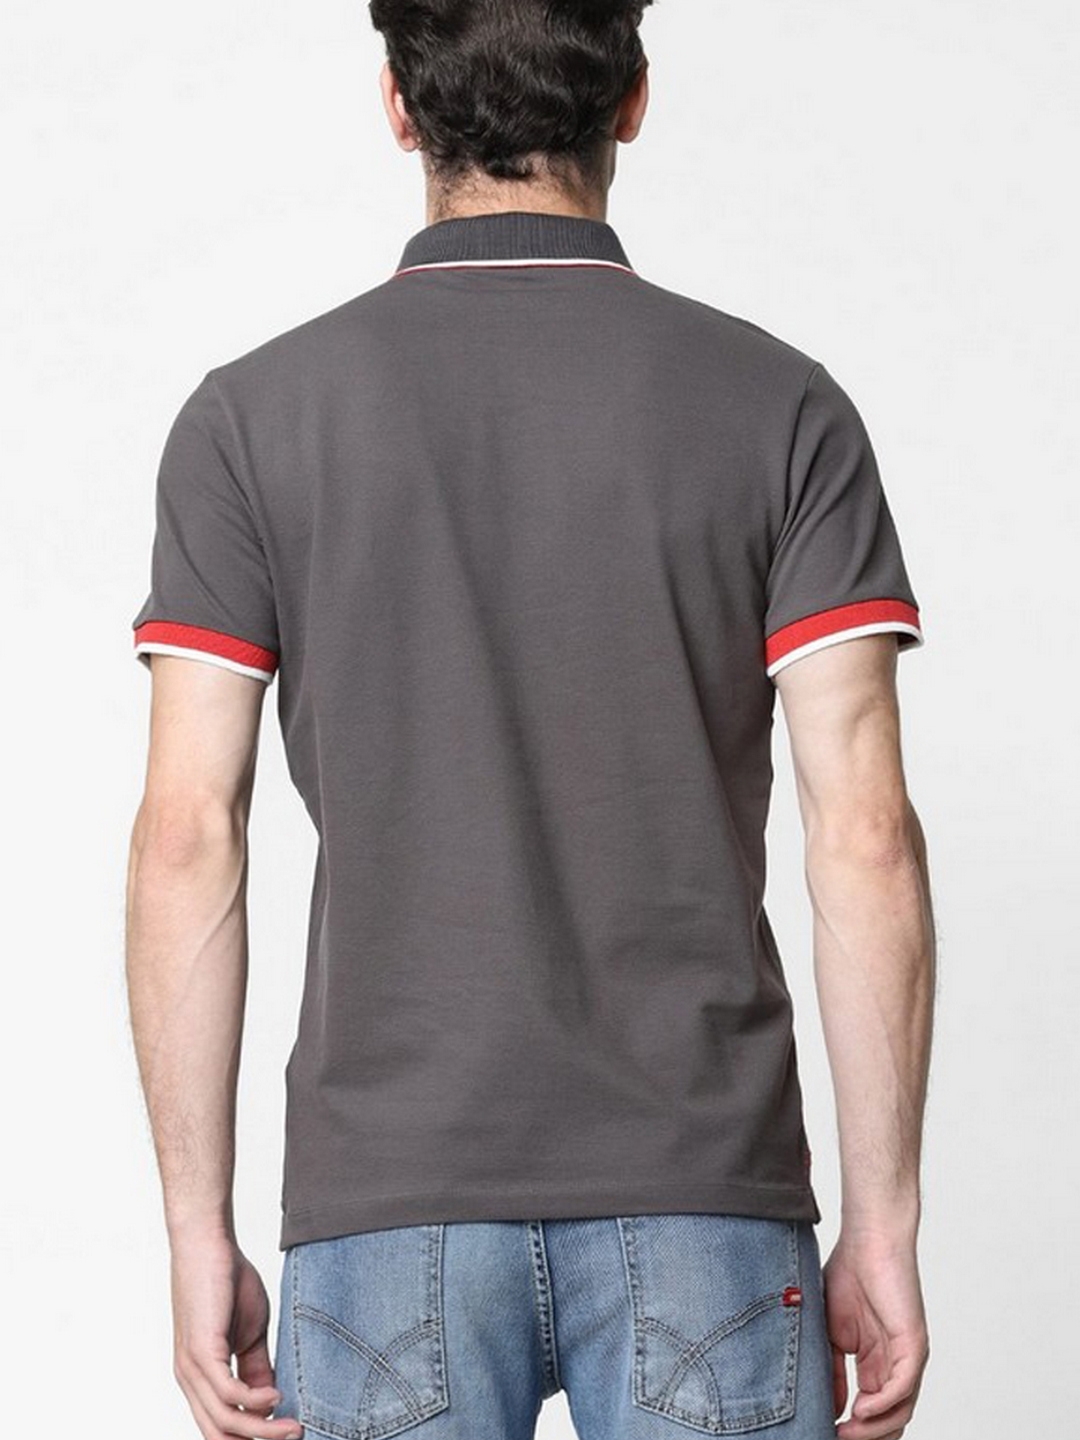 Men's Agap/s solid grey polo t-shirt